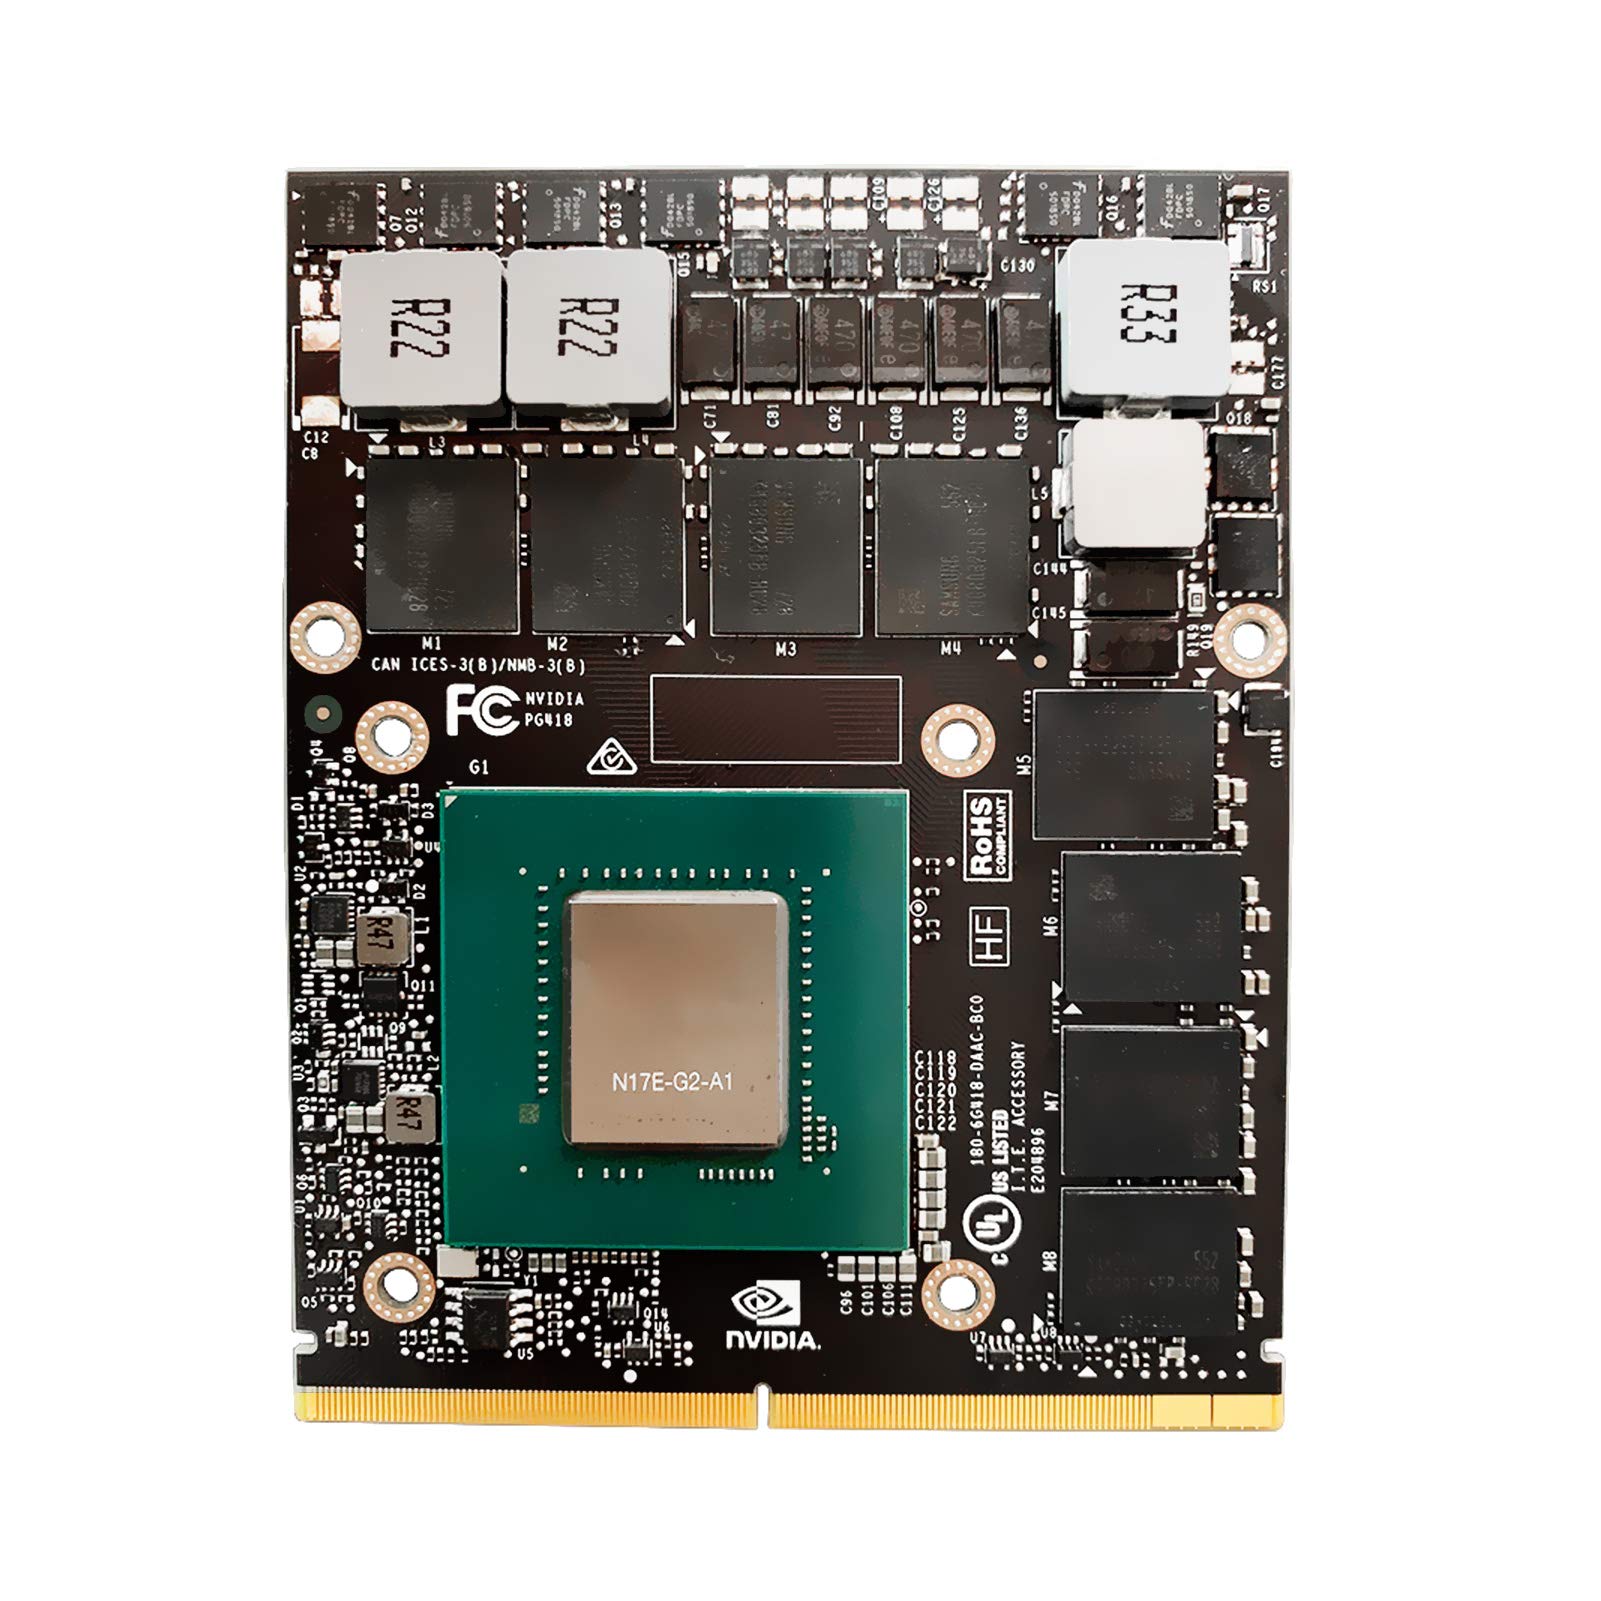 Original New NVIDIA GeForce GTX 1070 8GB Graphics Video Card, for Dell Alienware Clevo MSI HP Gaming Laptop Computer, N17E-G2-A1 GDDR5 8 GB MXM Boa...